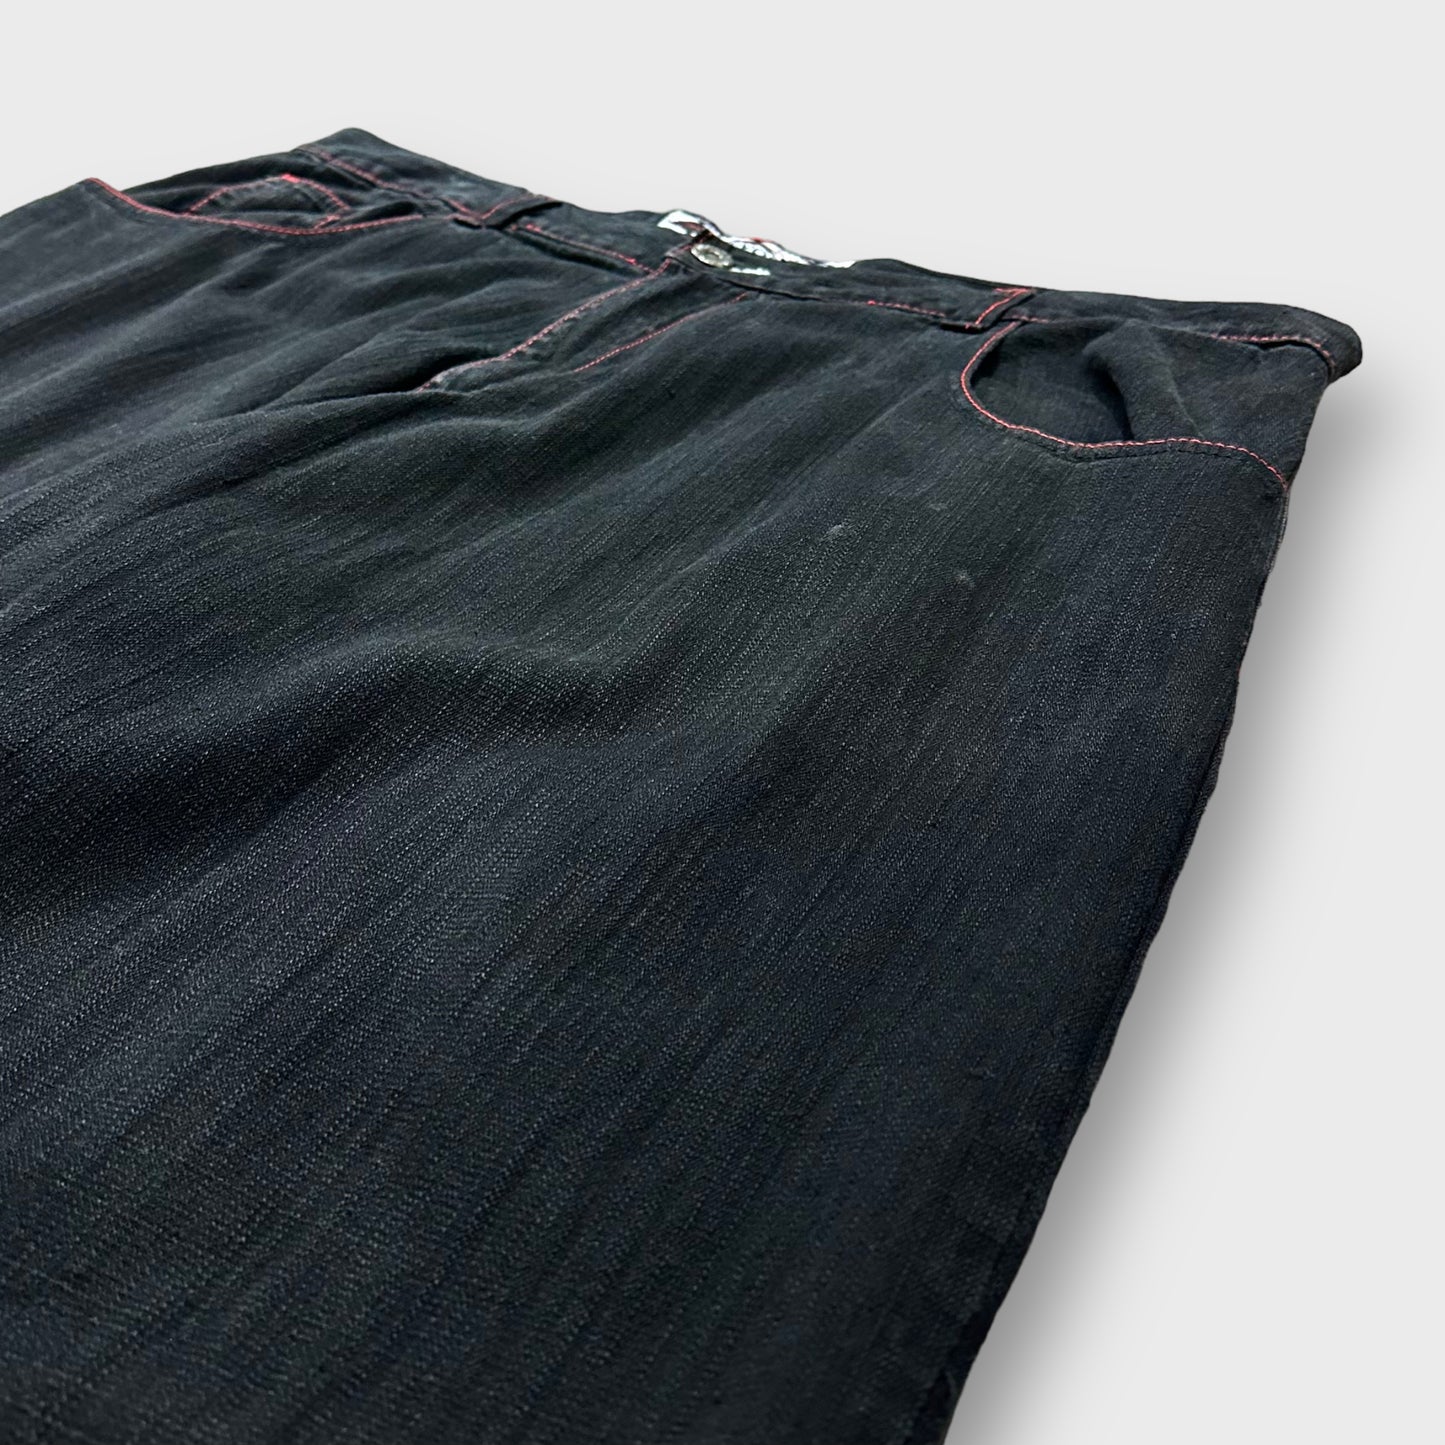 Argyle design black color wide denim pants